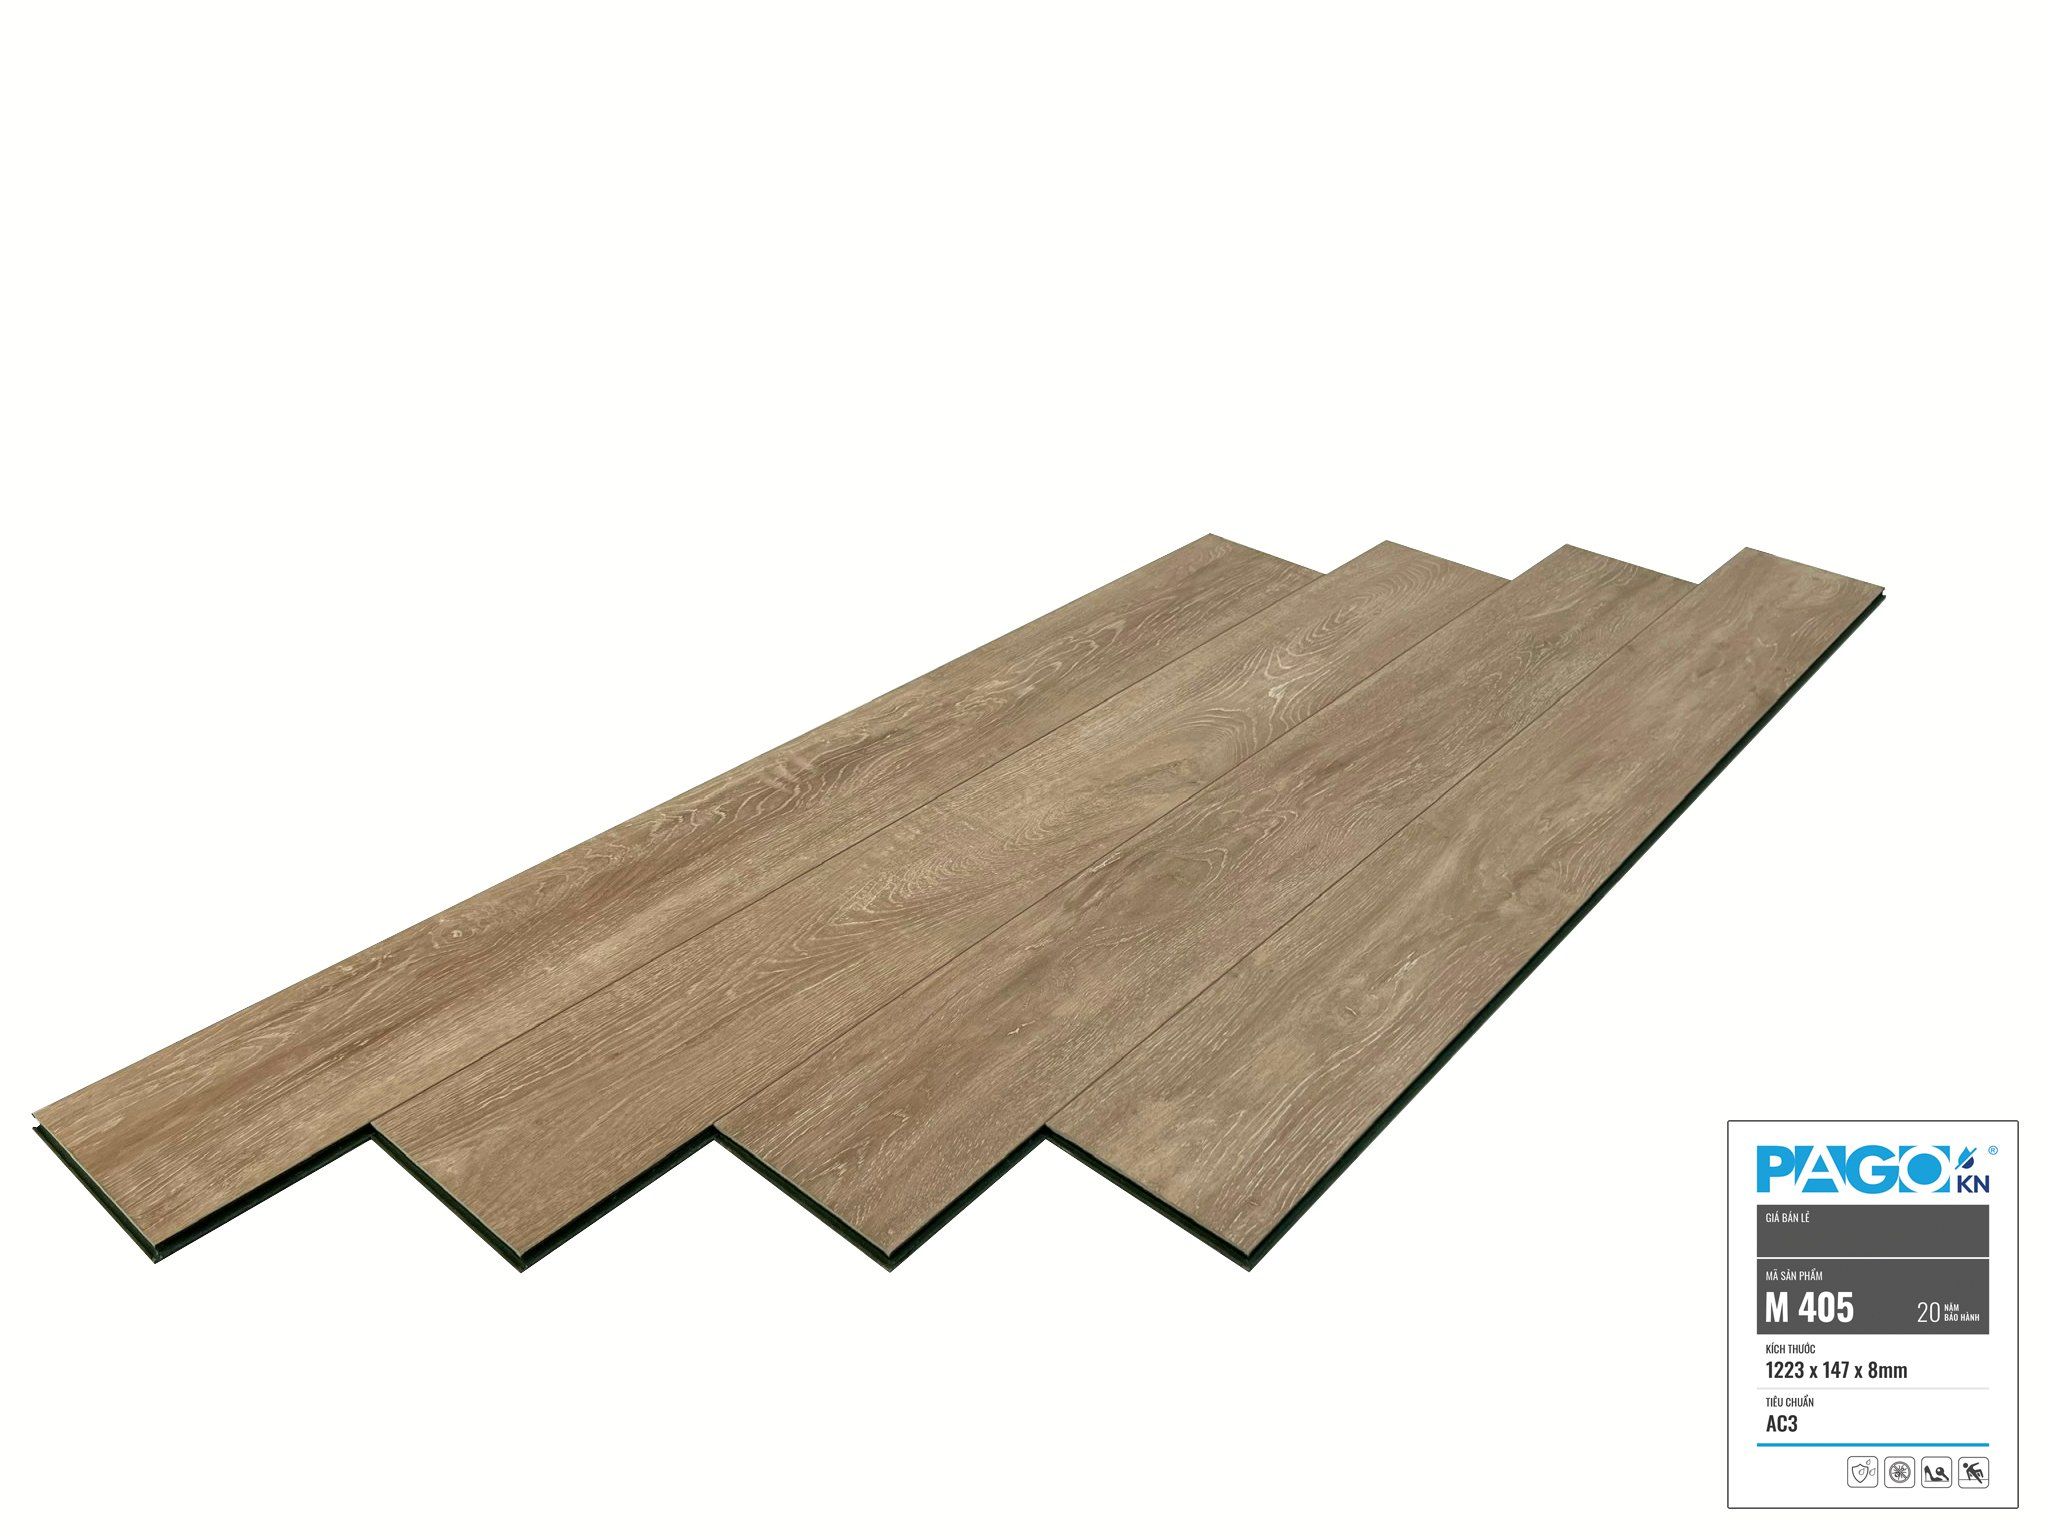  Sàn gỗ Pago – M405 